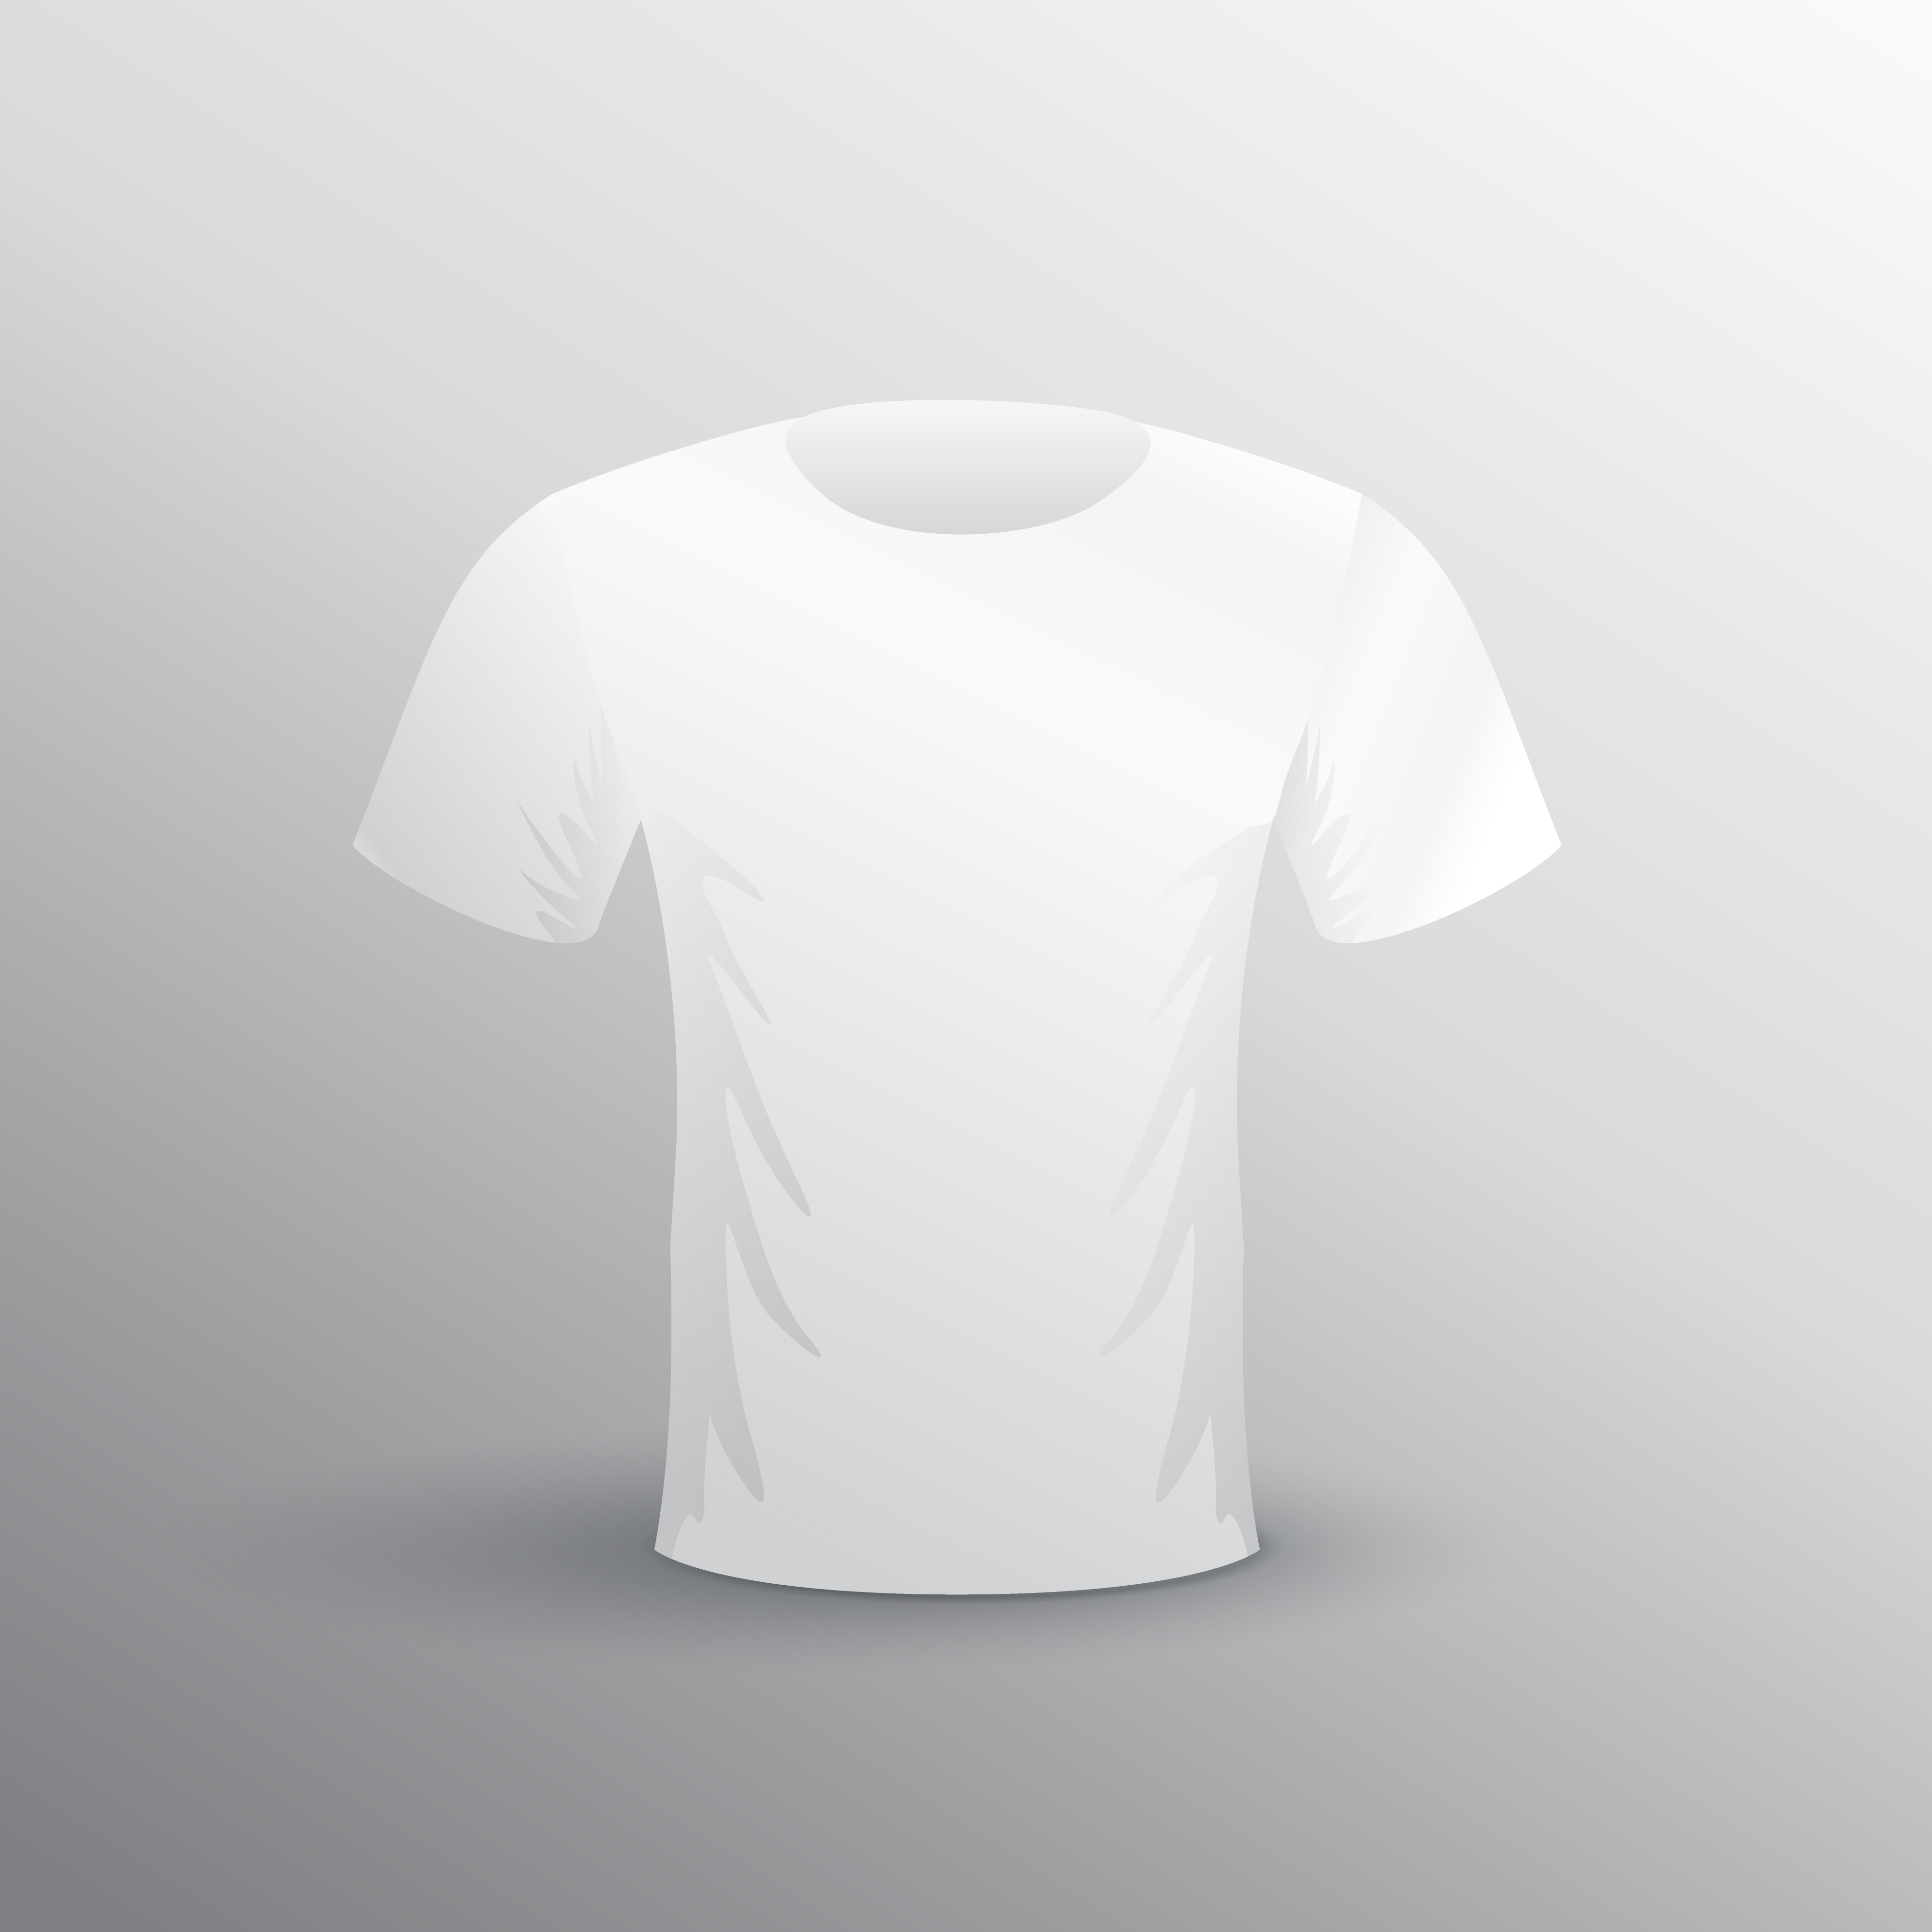 Mockup T Shirt Free Vector Art (2491 Free Downloads)